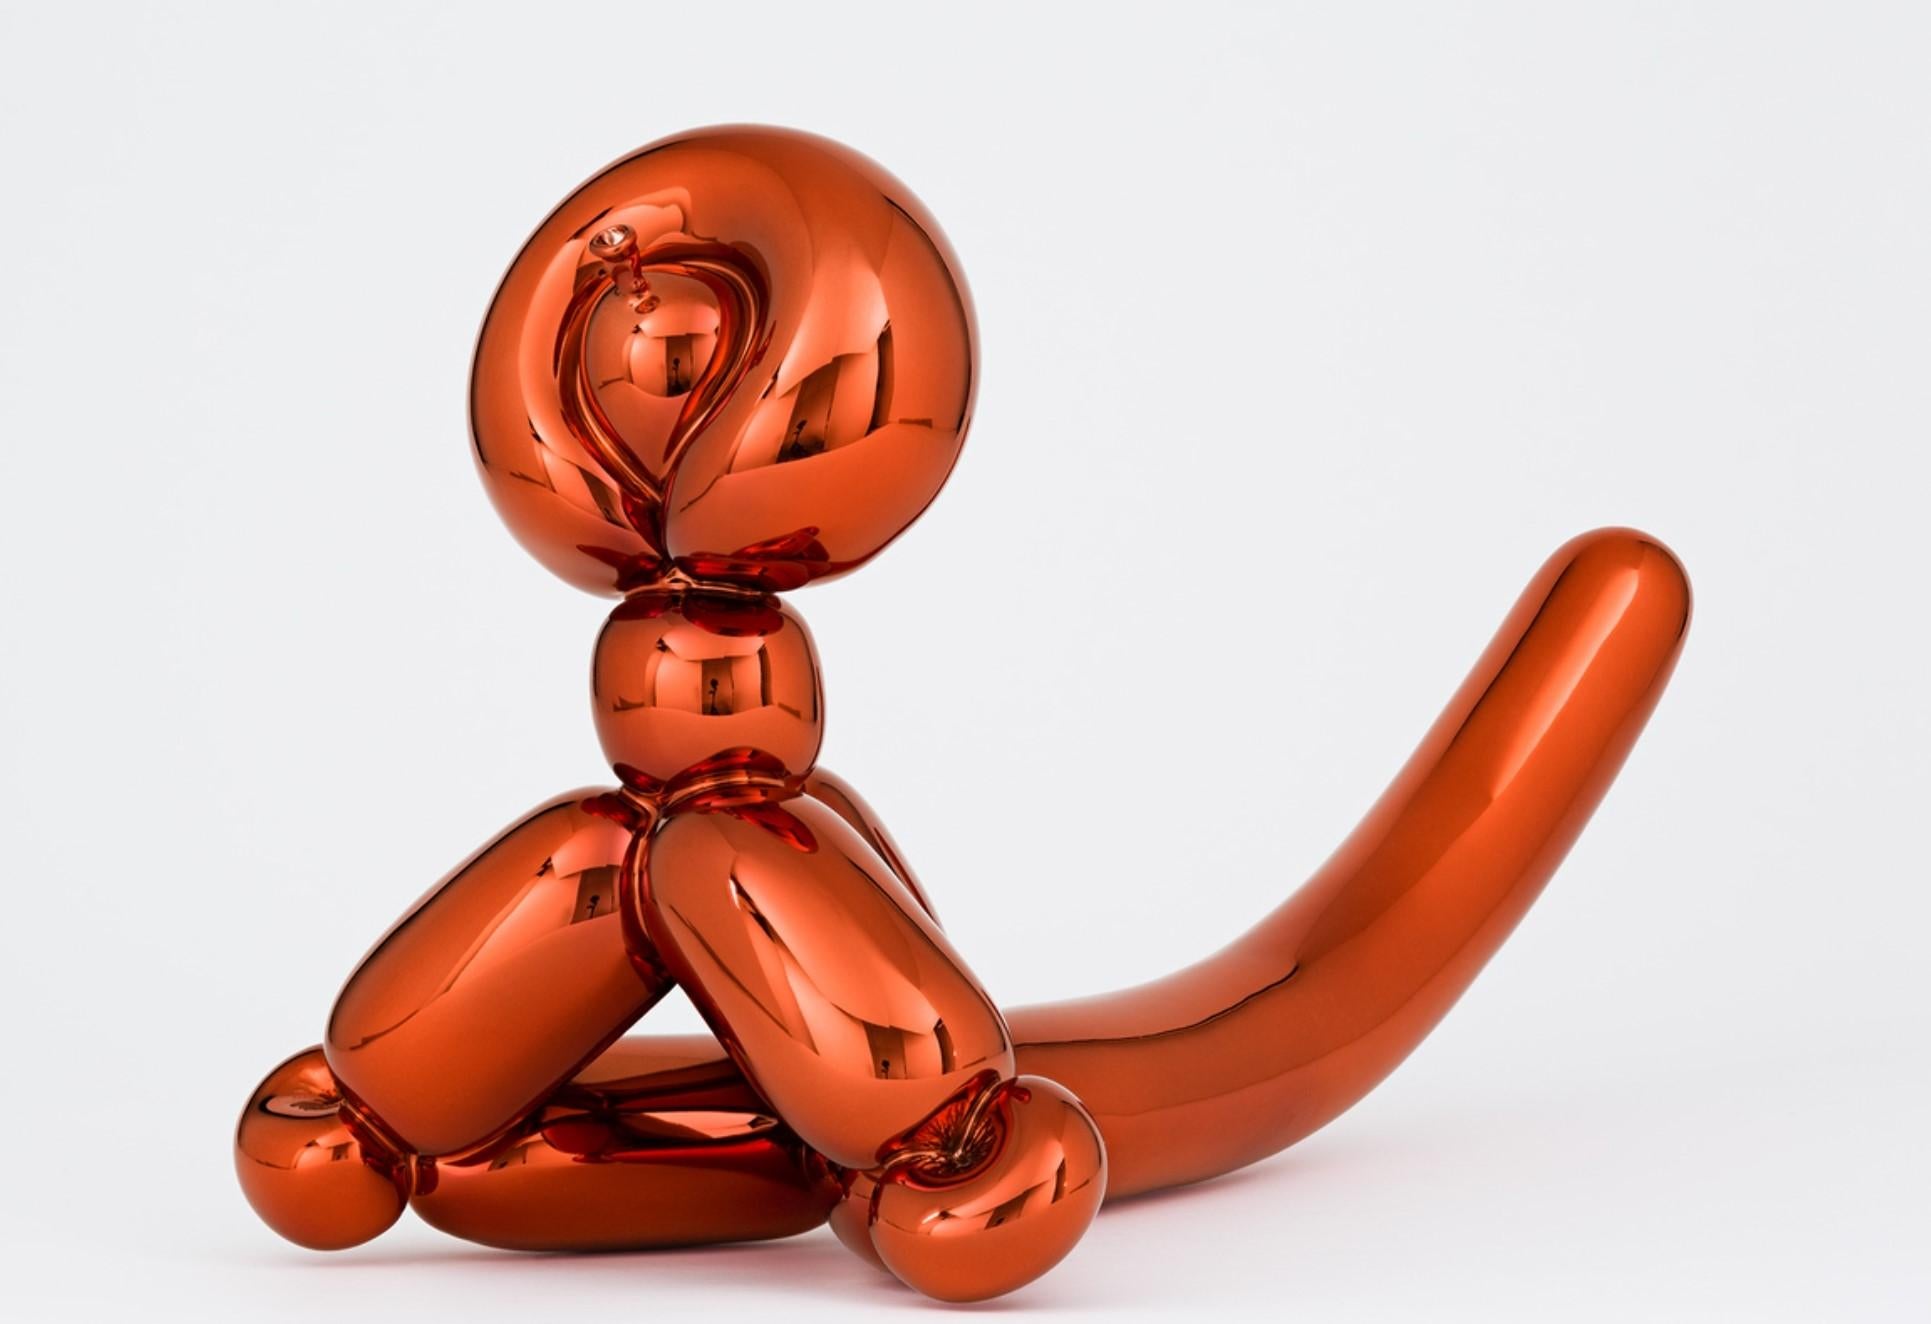 Ballon Monkey Orange - Sculpture by Jeff Koons